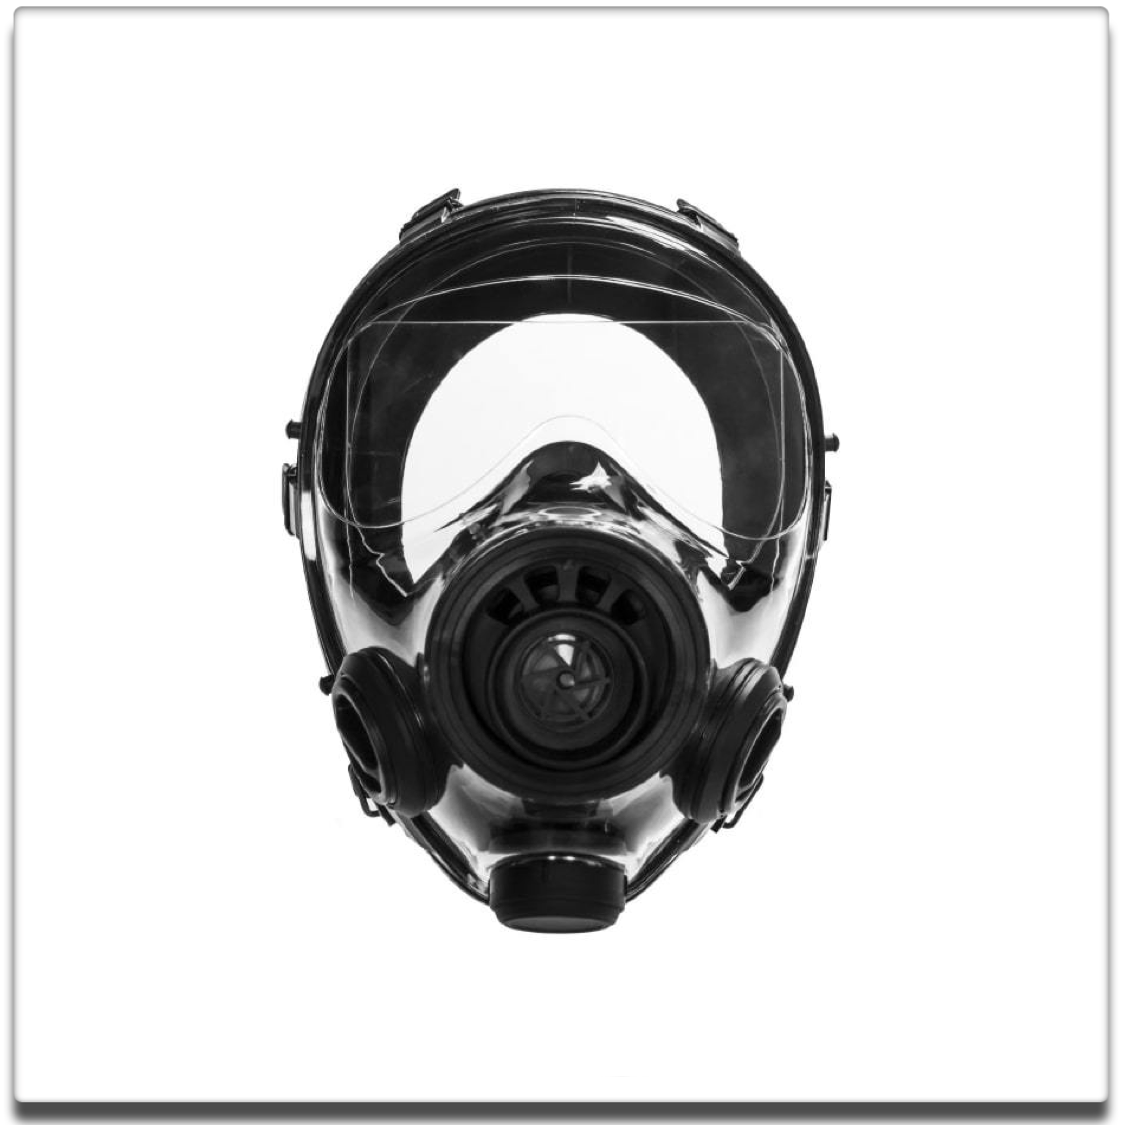 Protection Masks- wetsuit, diver, sharkskin, snorkeling gear, watersports equipment, diving fins, snorkeling mask, ocean reef, Garmin G1